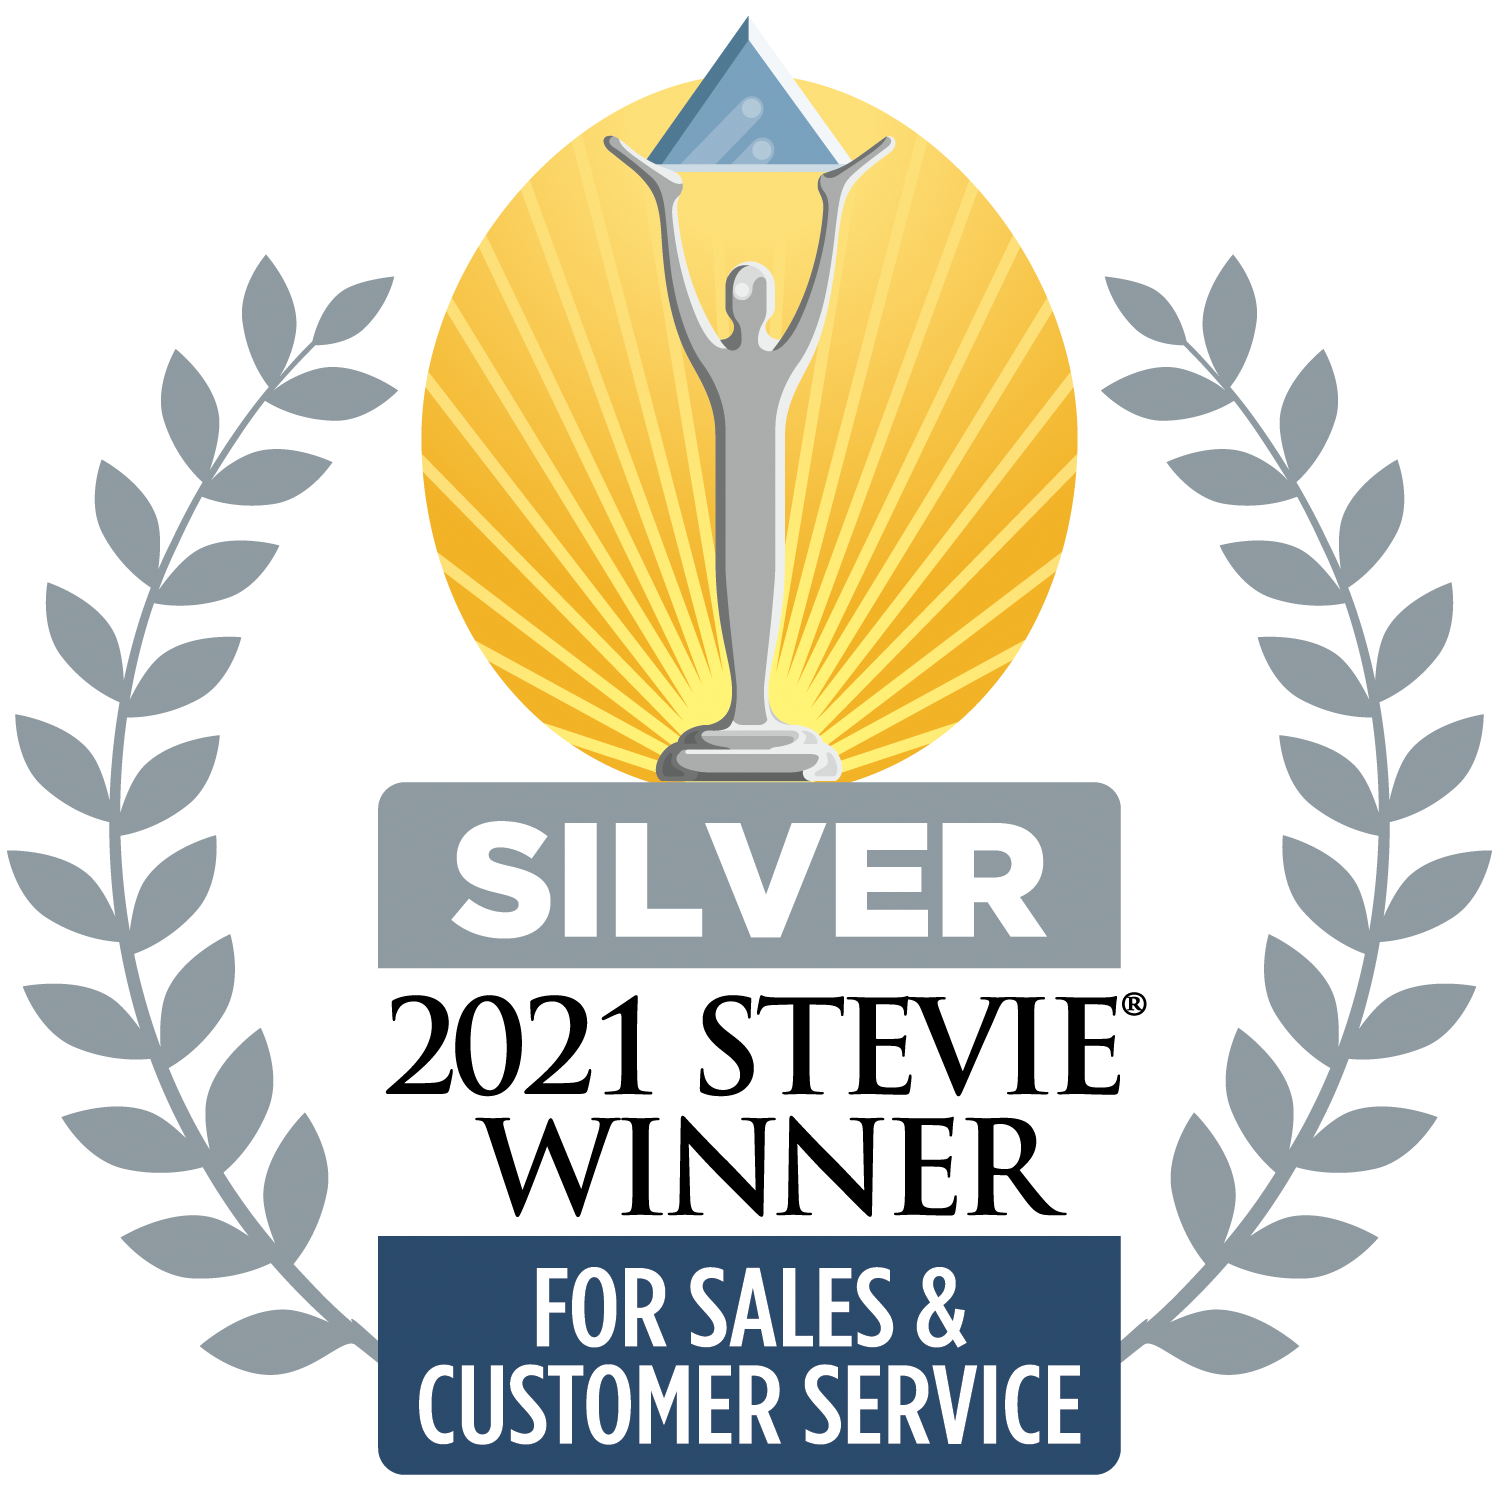 Silver Stevie Award logo image. 